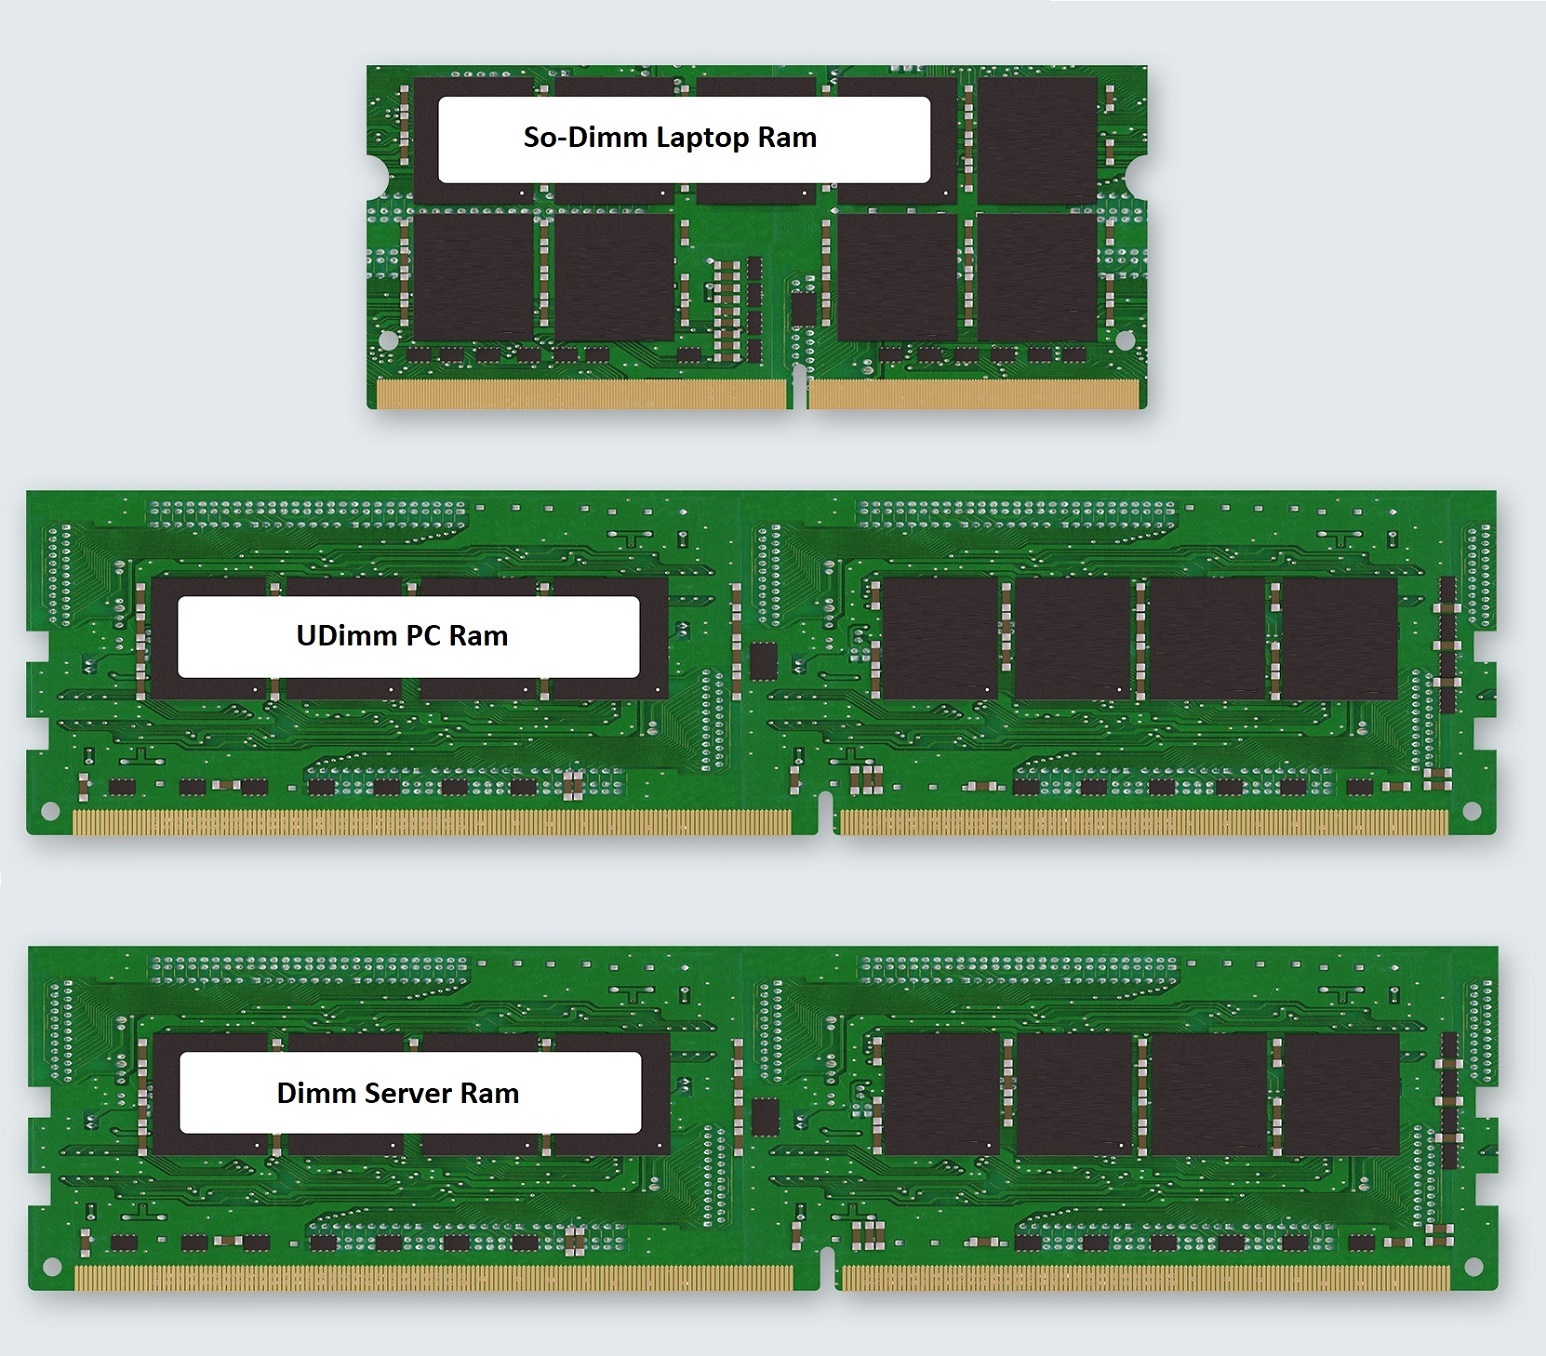 Ram размеры. DIMM И so DIMM ddr2. Форм-фактор оперативной памяти DIMM. UDIMM ddr3. DIMM память от so DIMM.